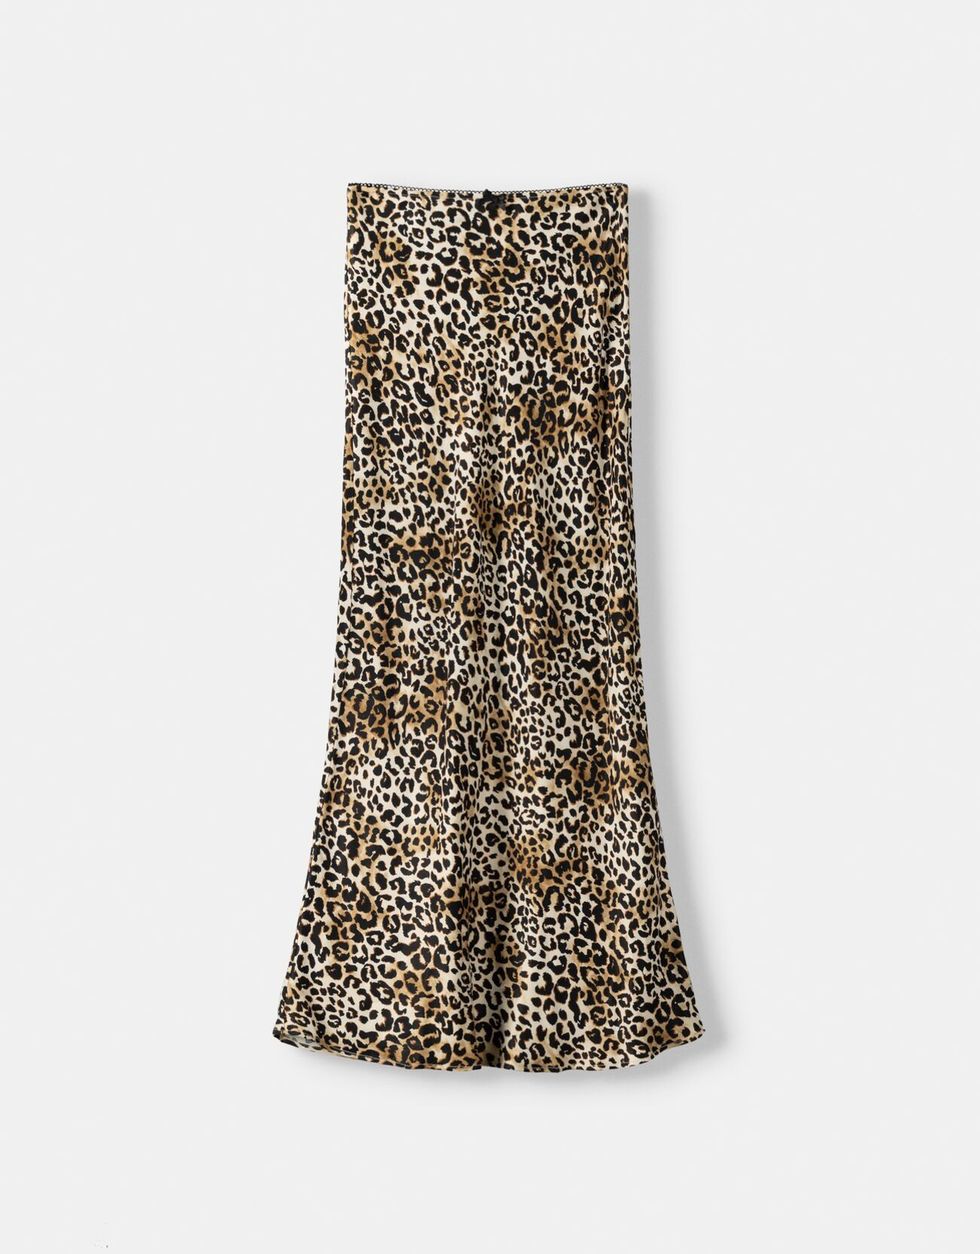 Falda de leopardo